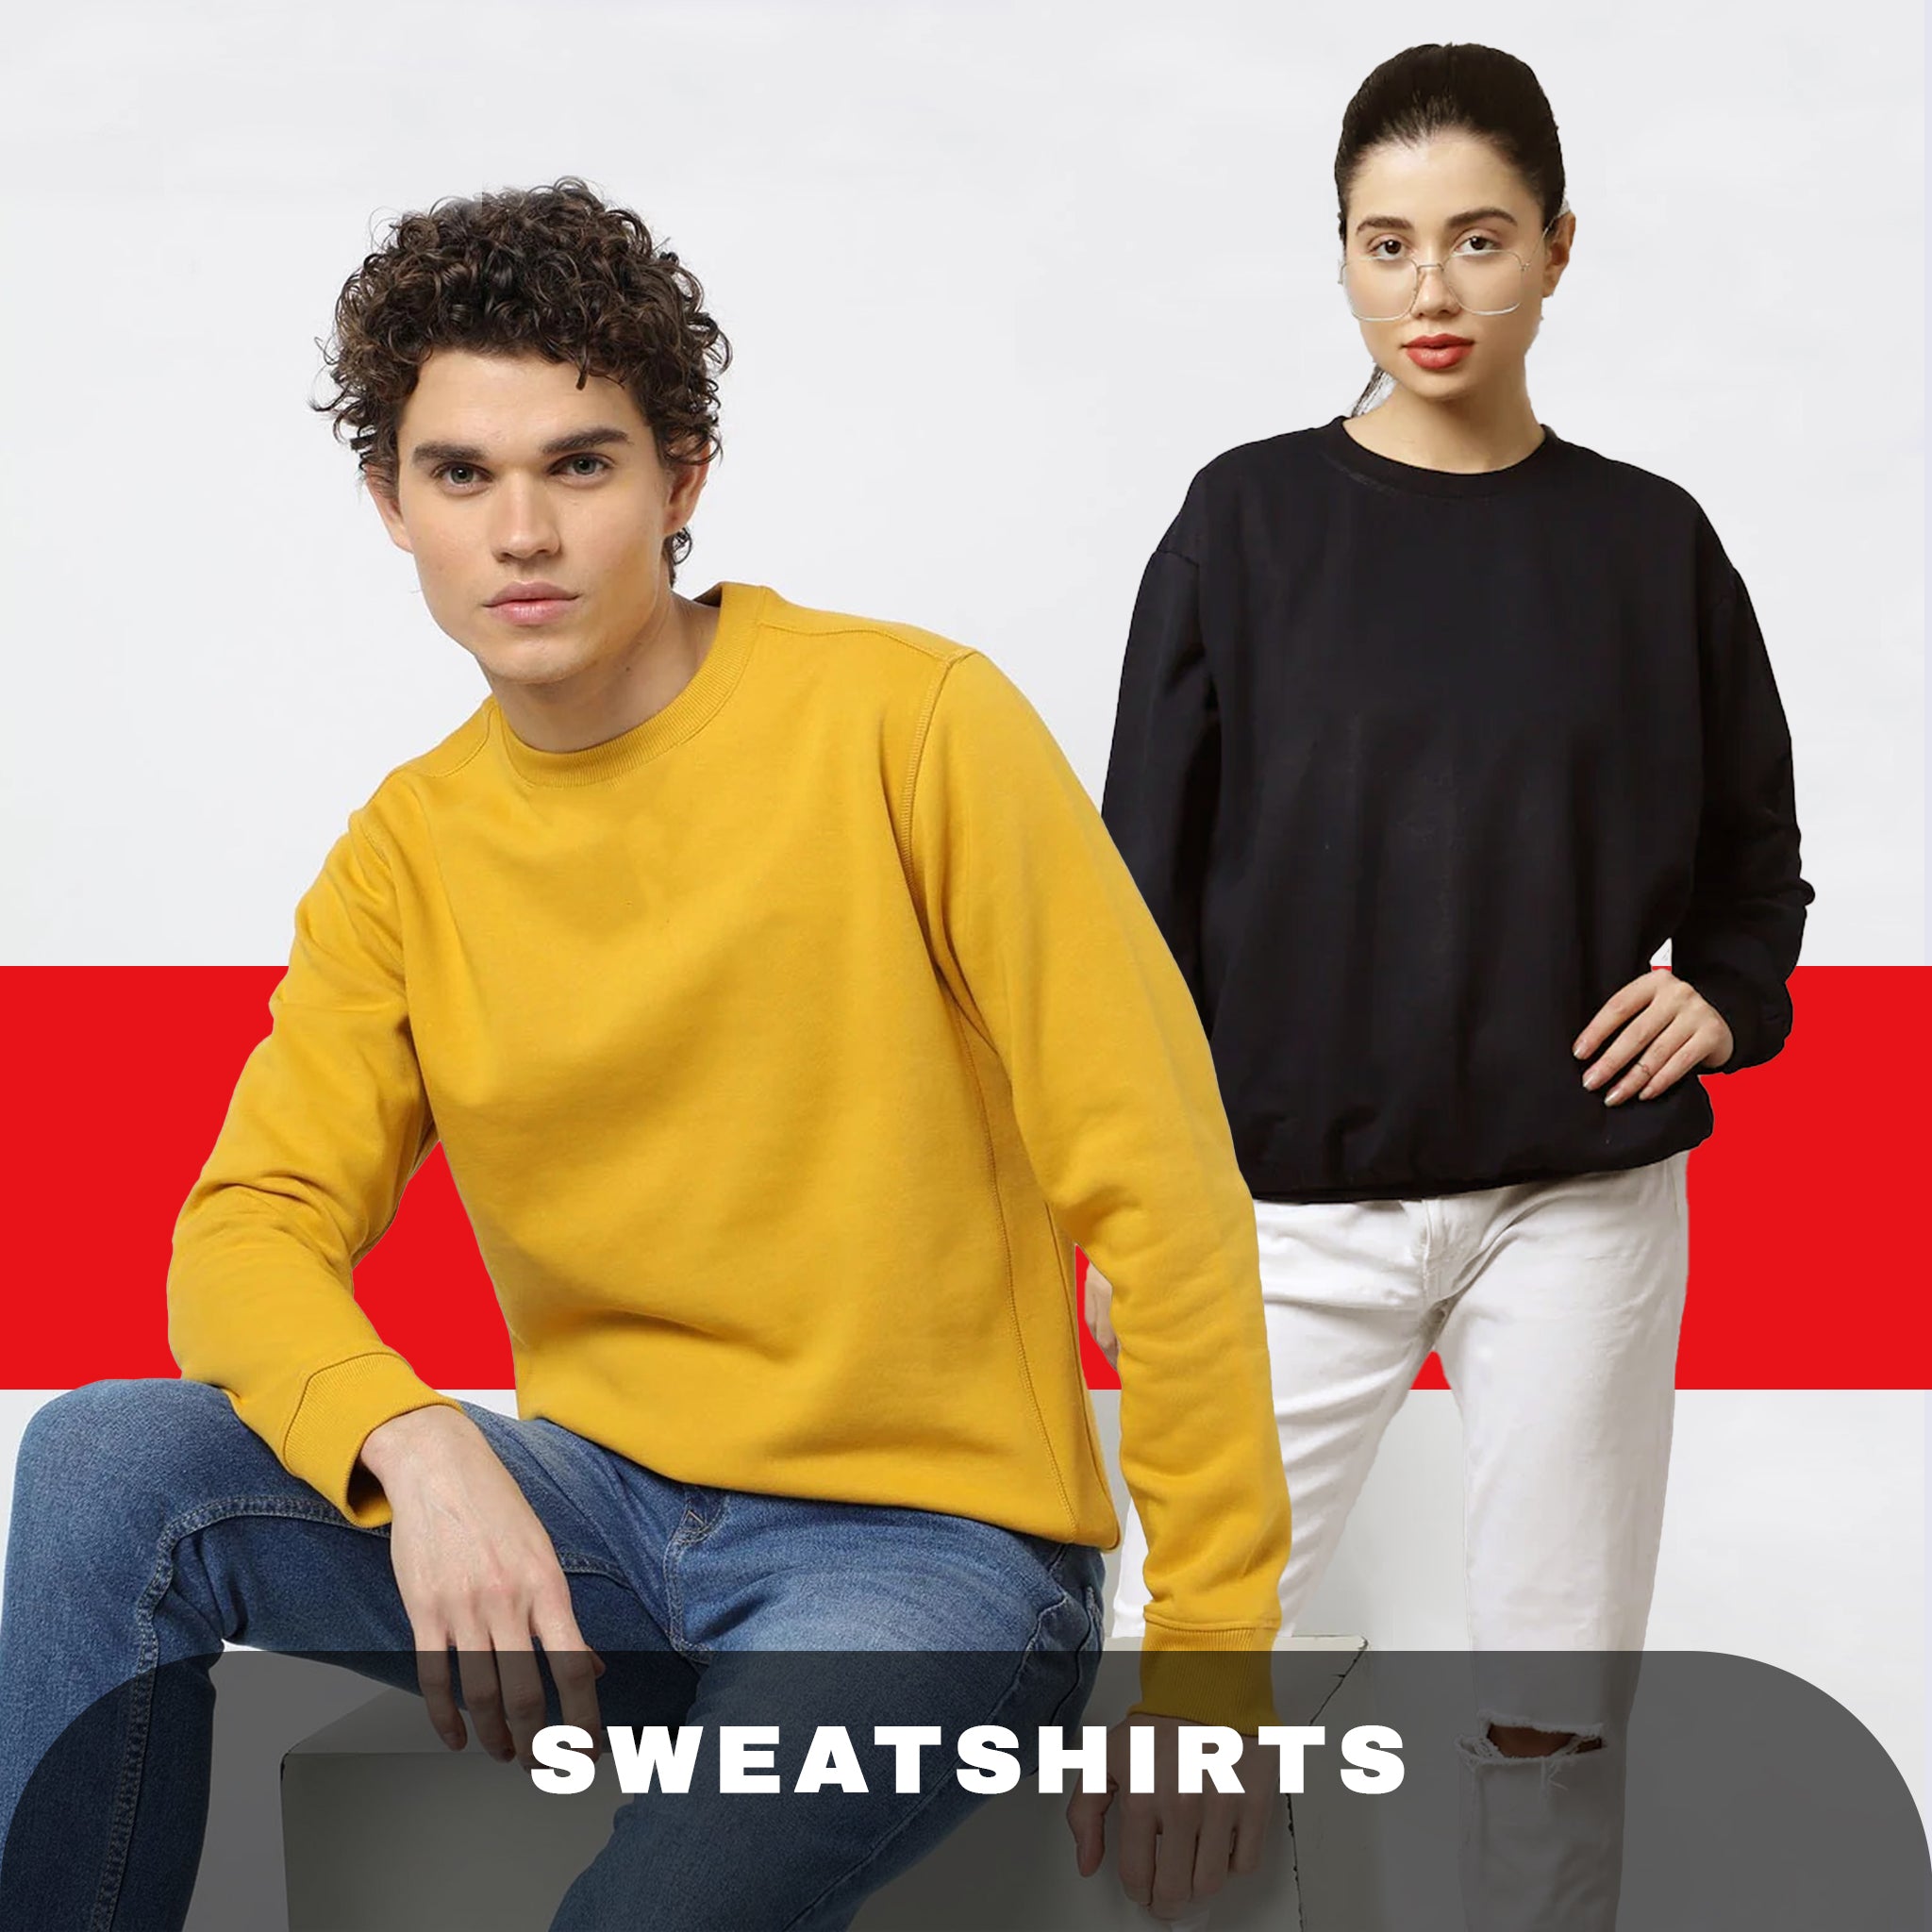 Sweatshirts Categorie Image